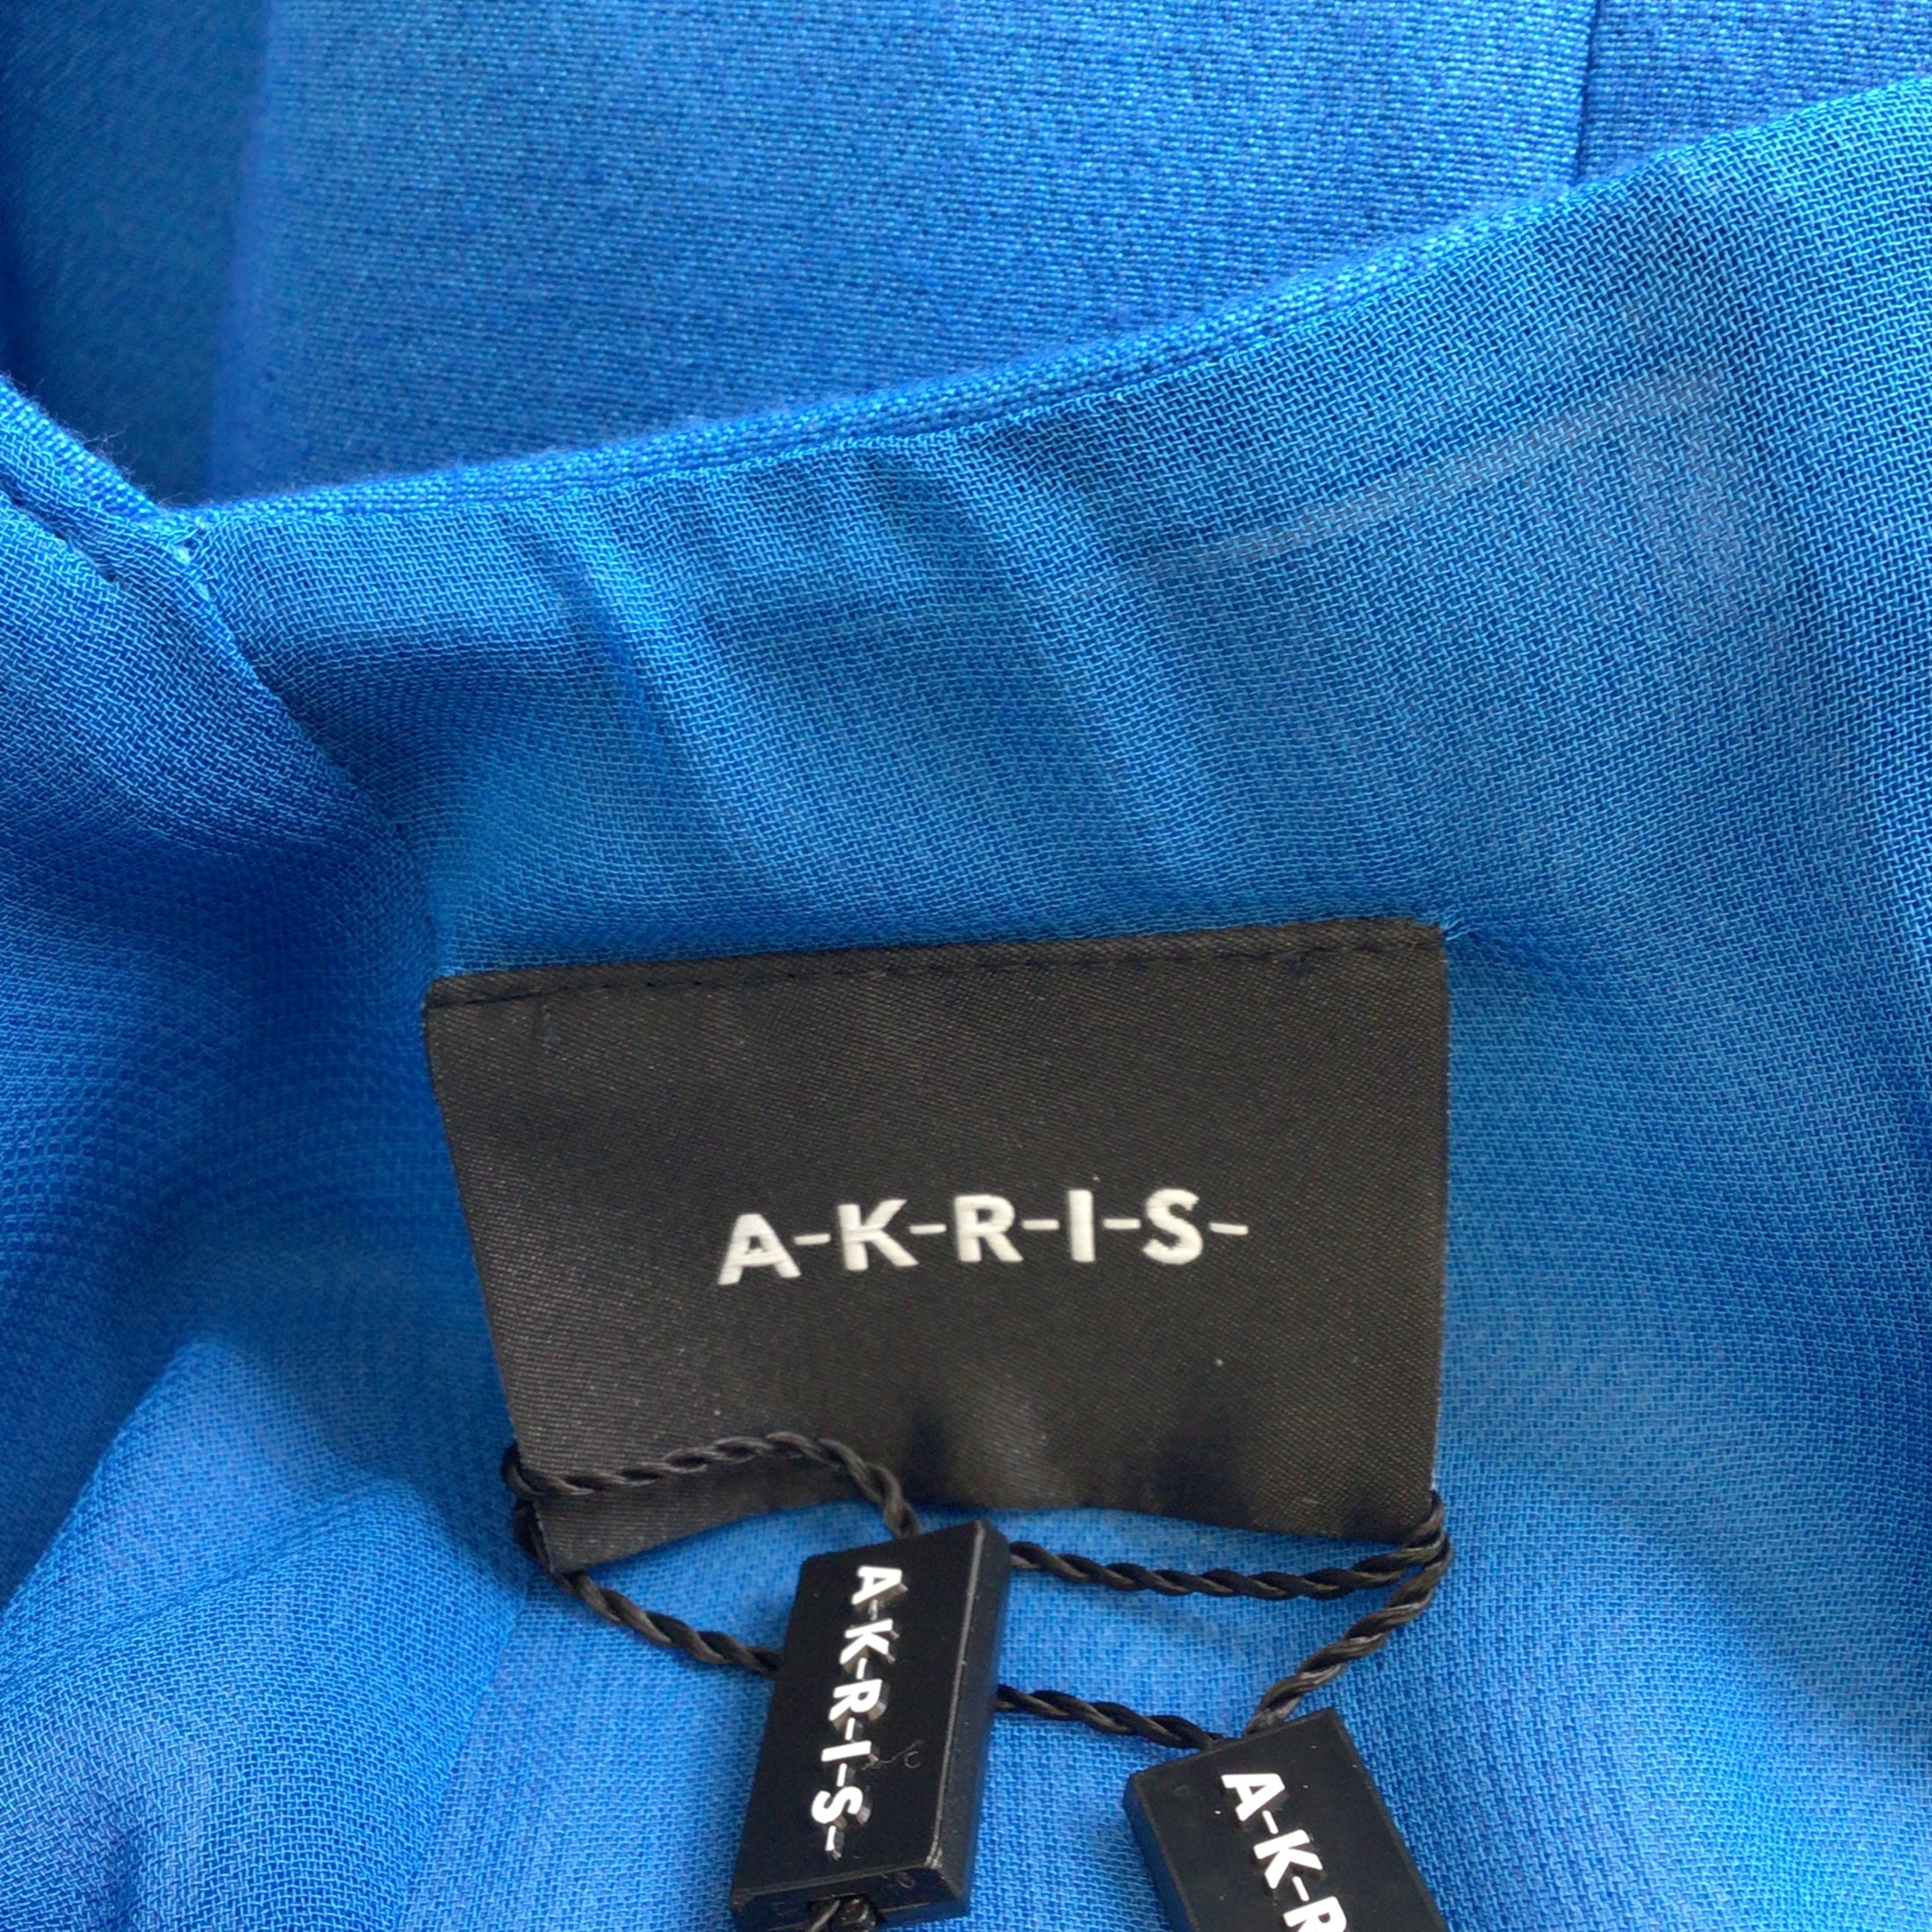 Akris Cyan Blue Sleeveless V-Neck Cotton and Silk Dress